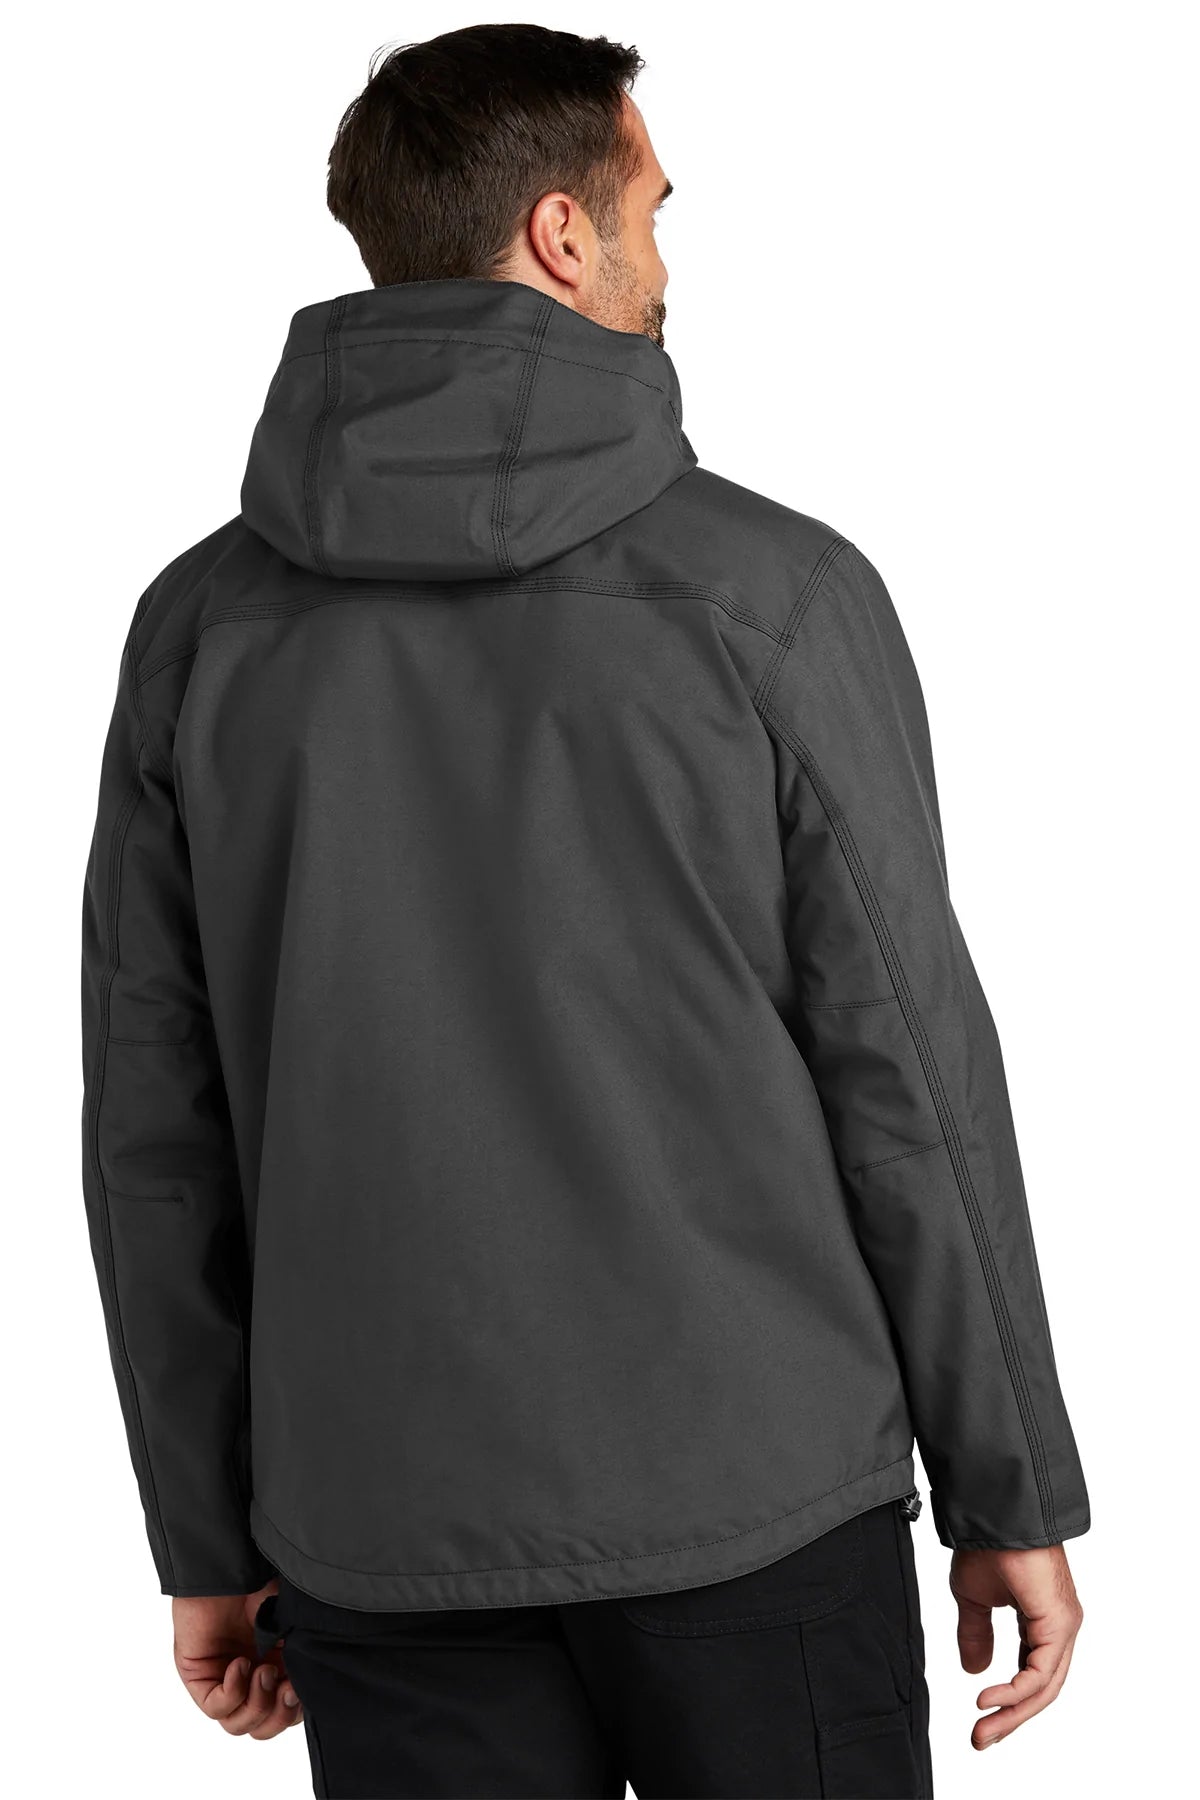 Carhartt Shoreline Branded Jackets, Shadow Grey